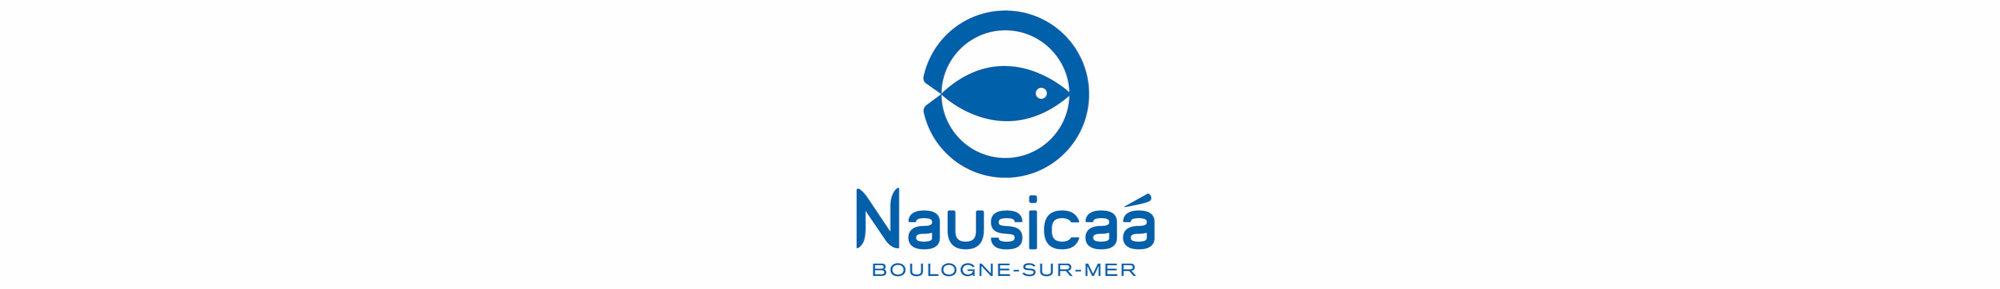 NAUSICAÁ logo